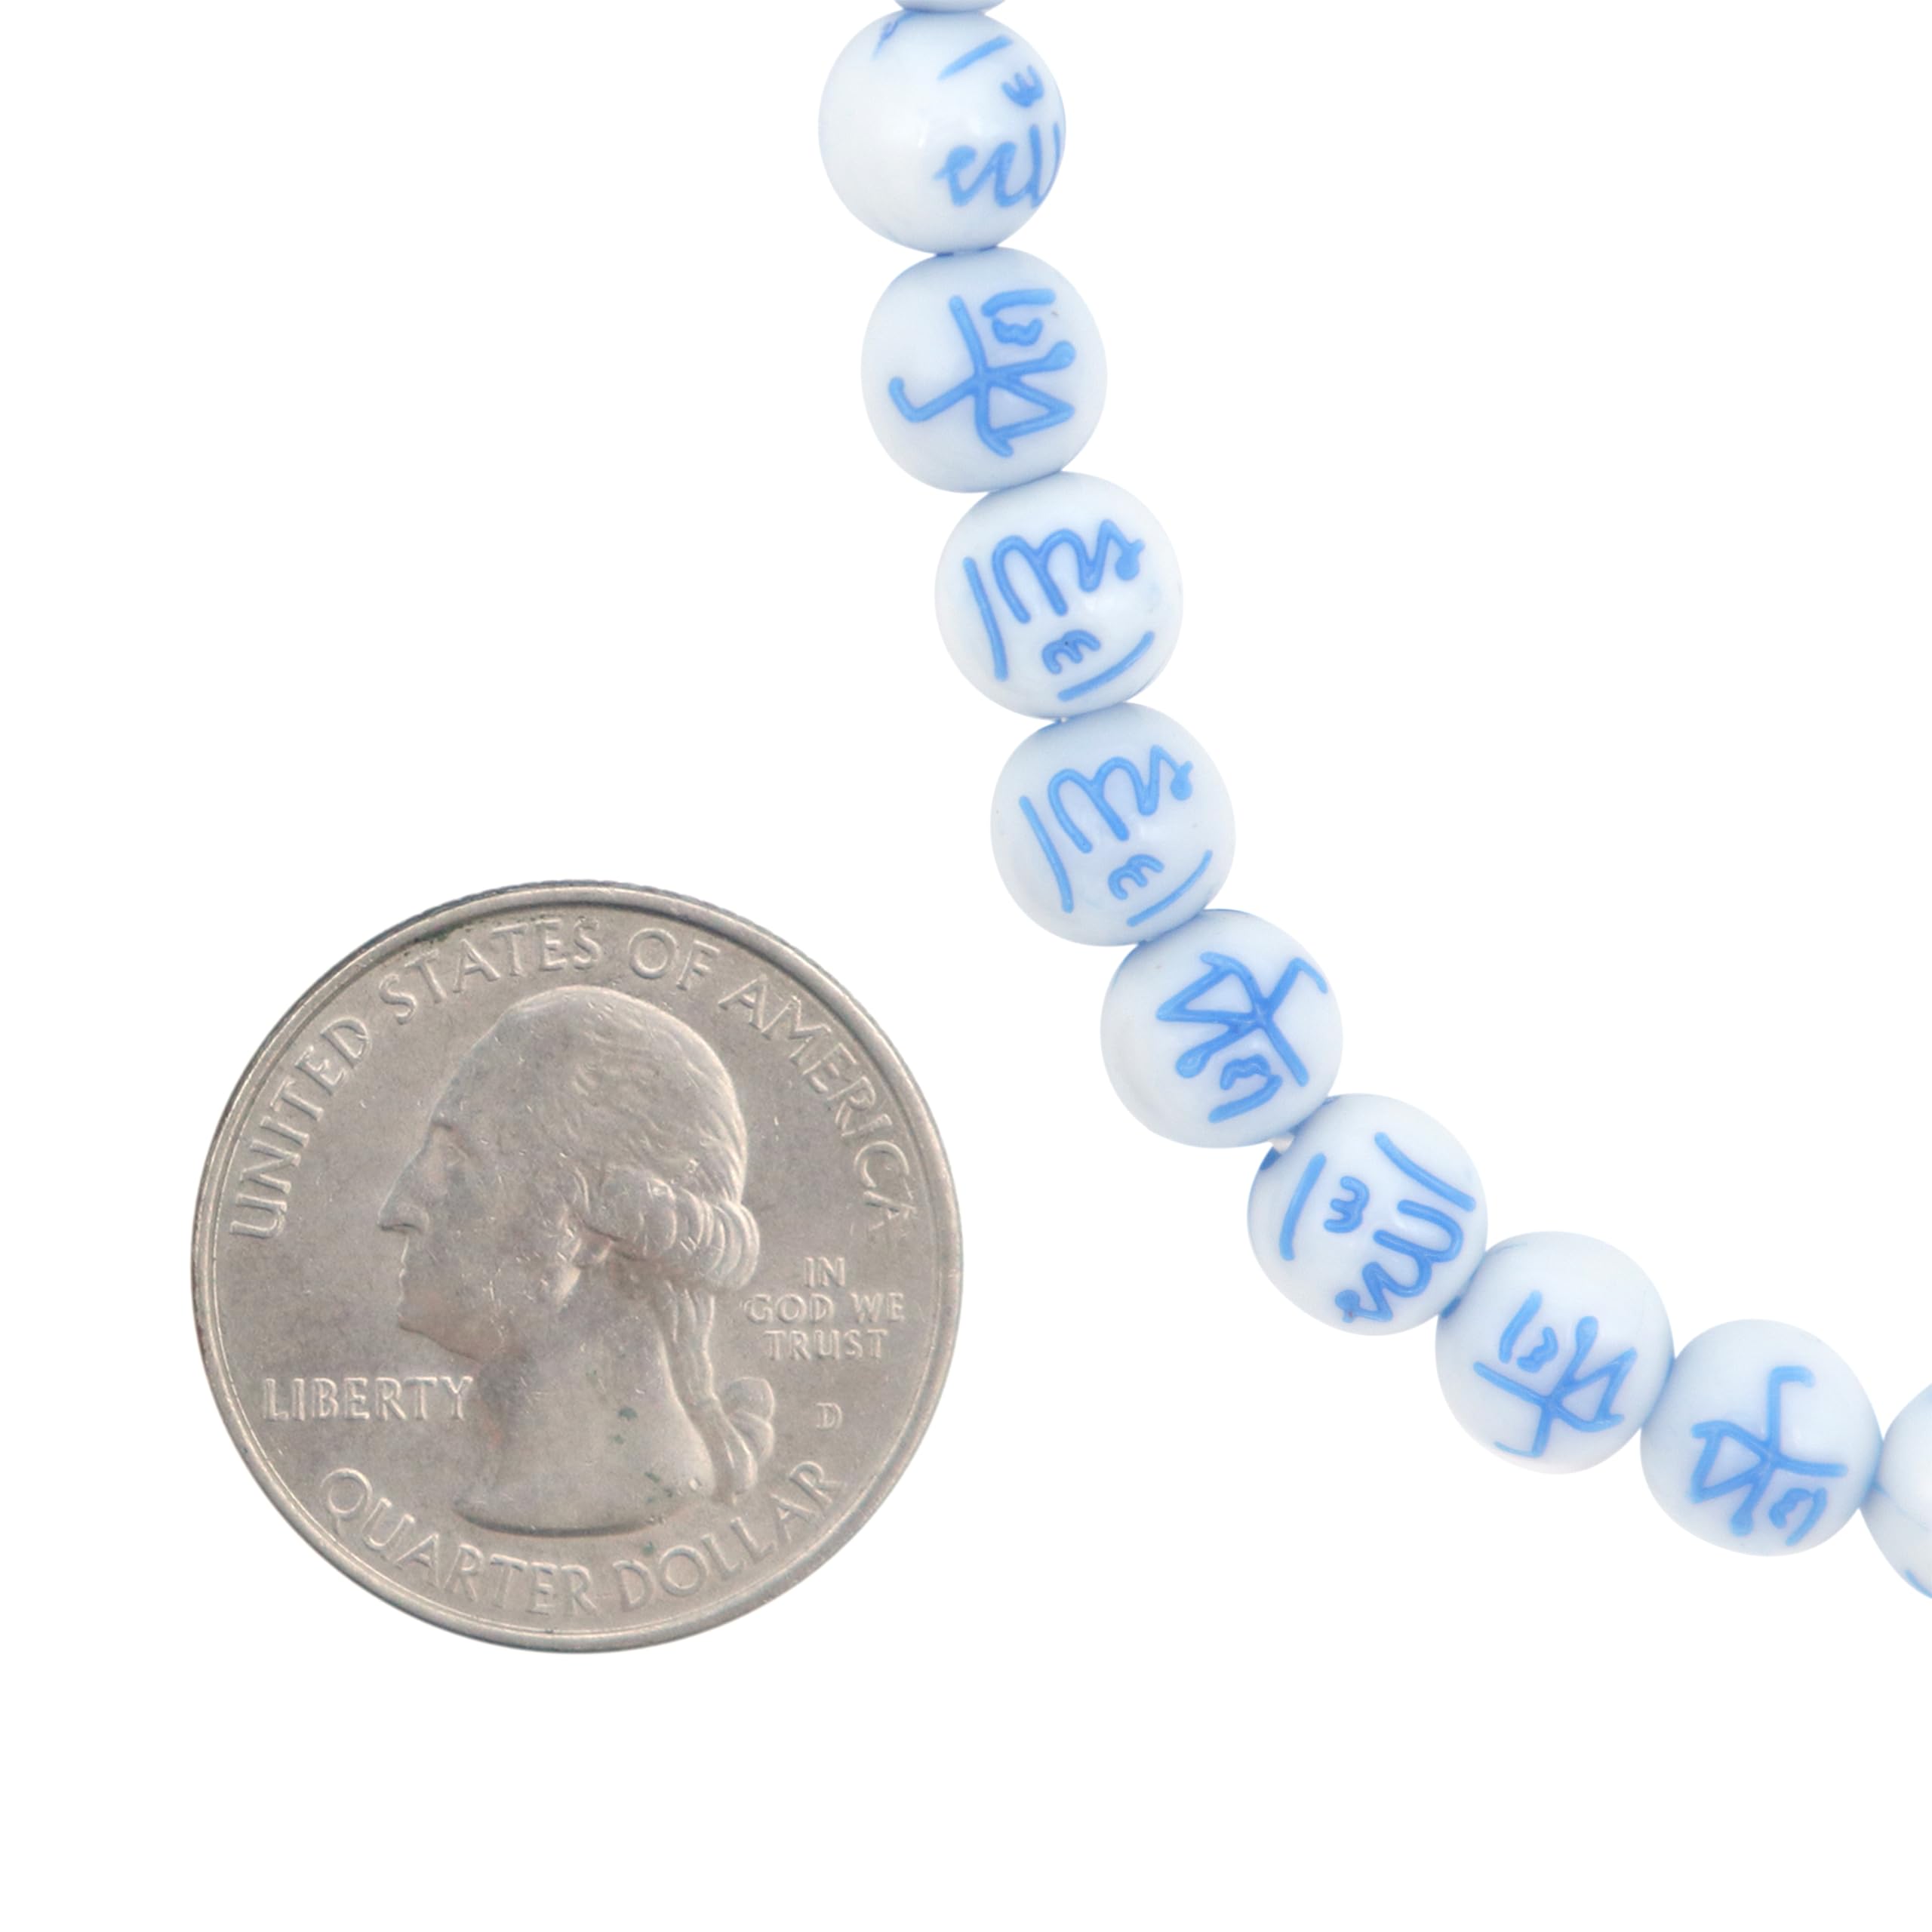 Muslim Prayer Bracelet 33-Beads Tasbih with ALLAH Muhammad Engraved on 7mm Beads 26-inch White & Blue – Tasbeeh Sibha Misbaha Dhikr Beads for SALAWAT